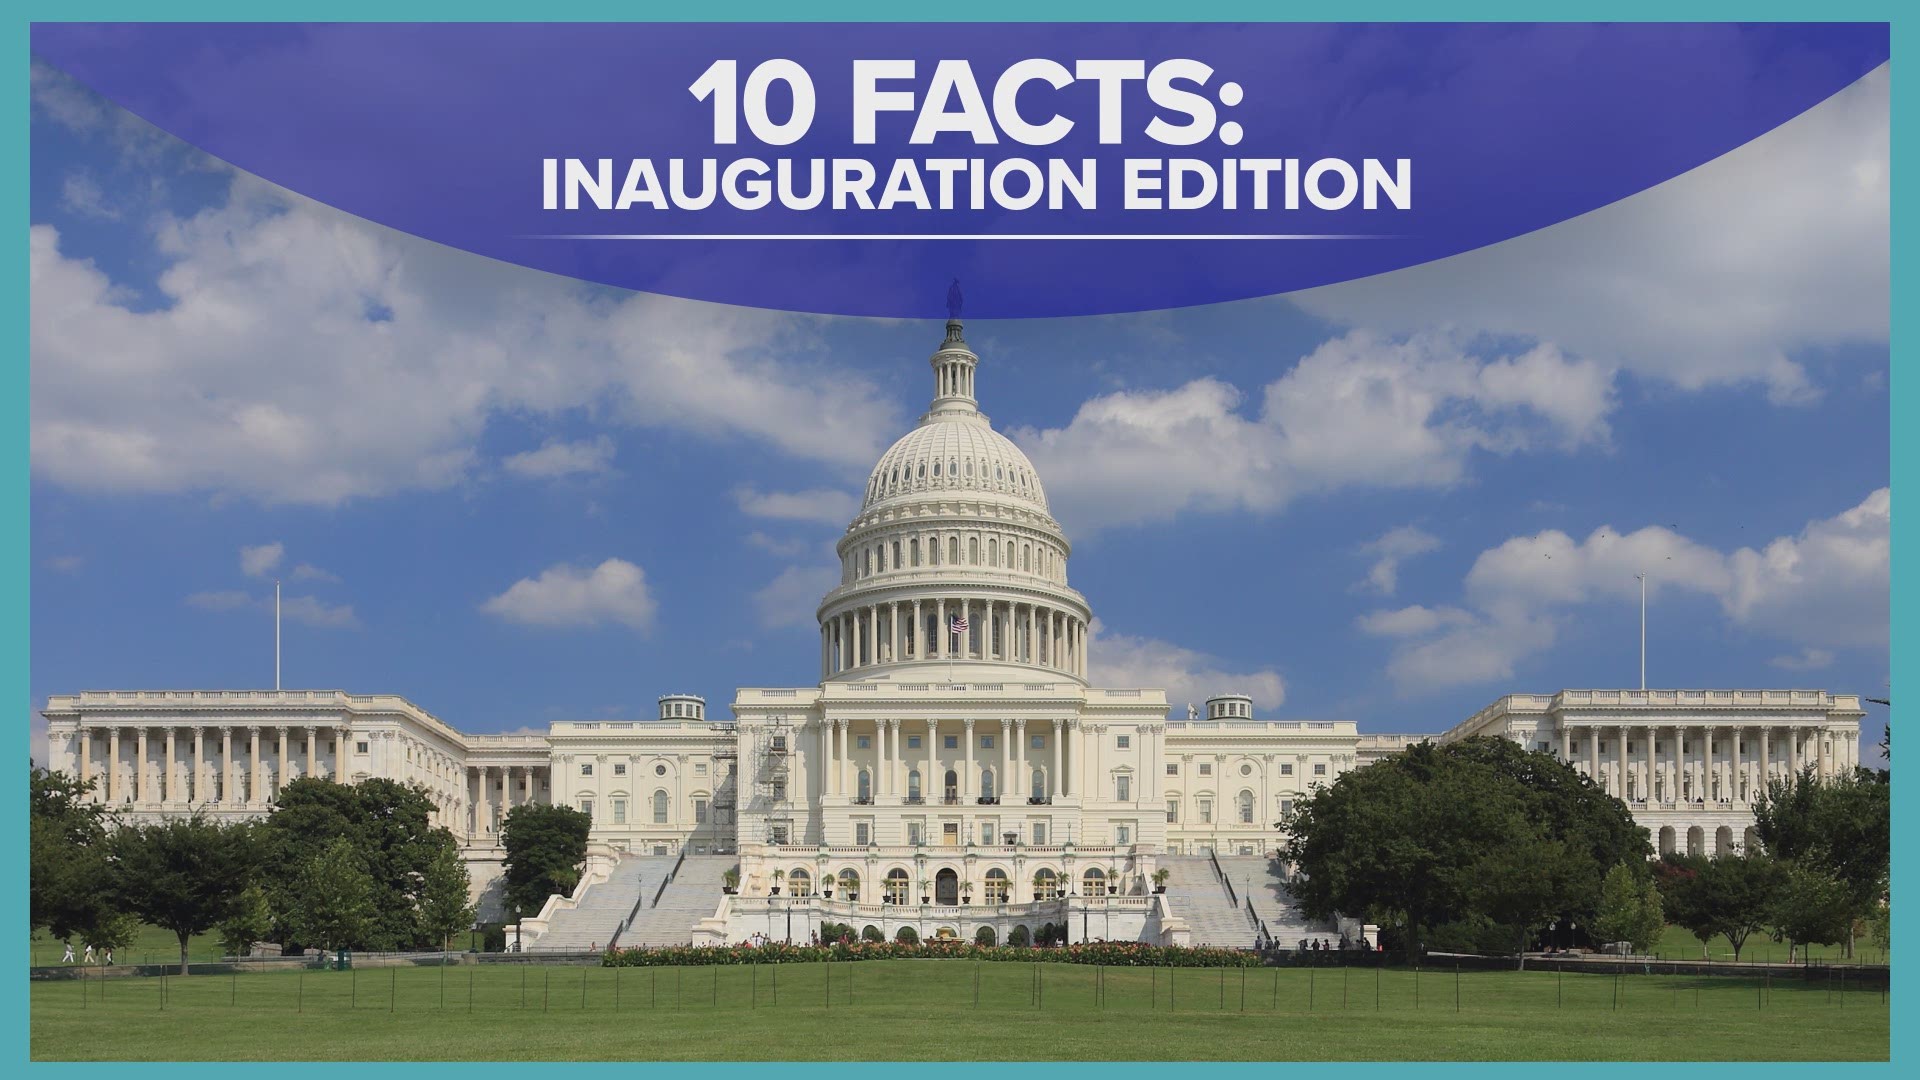 Joe Biden Harris 2021 Presidential Inauguration Calendar Kamala Harris 3 Pack Details about  / 